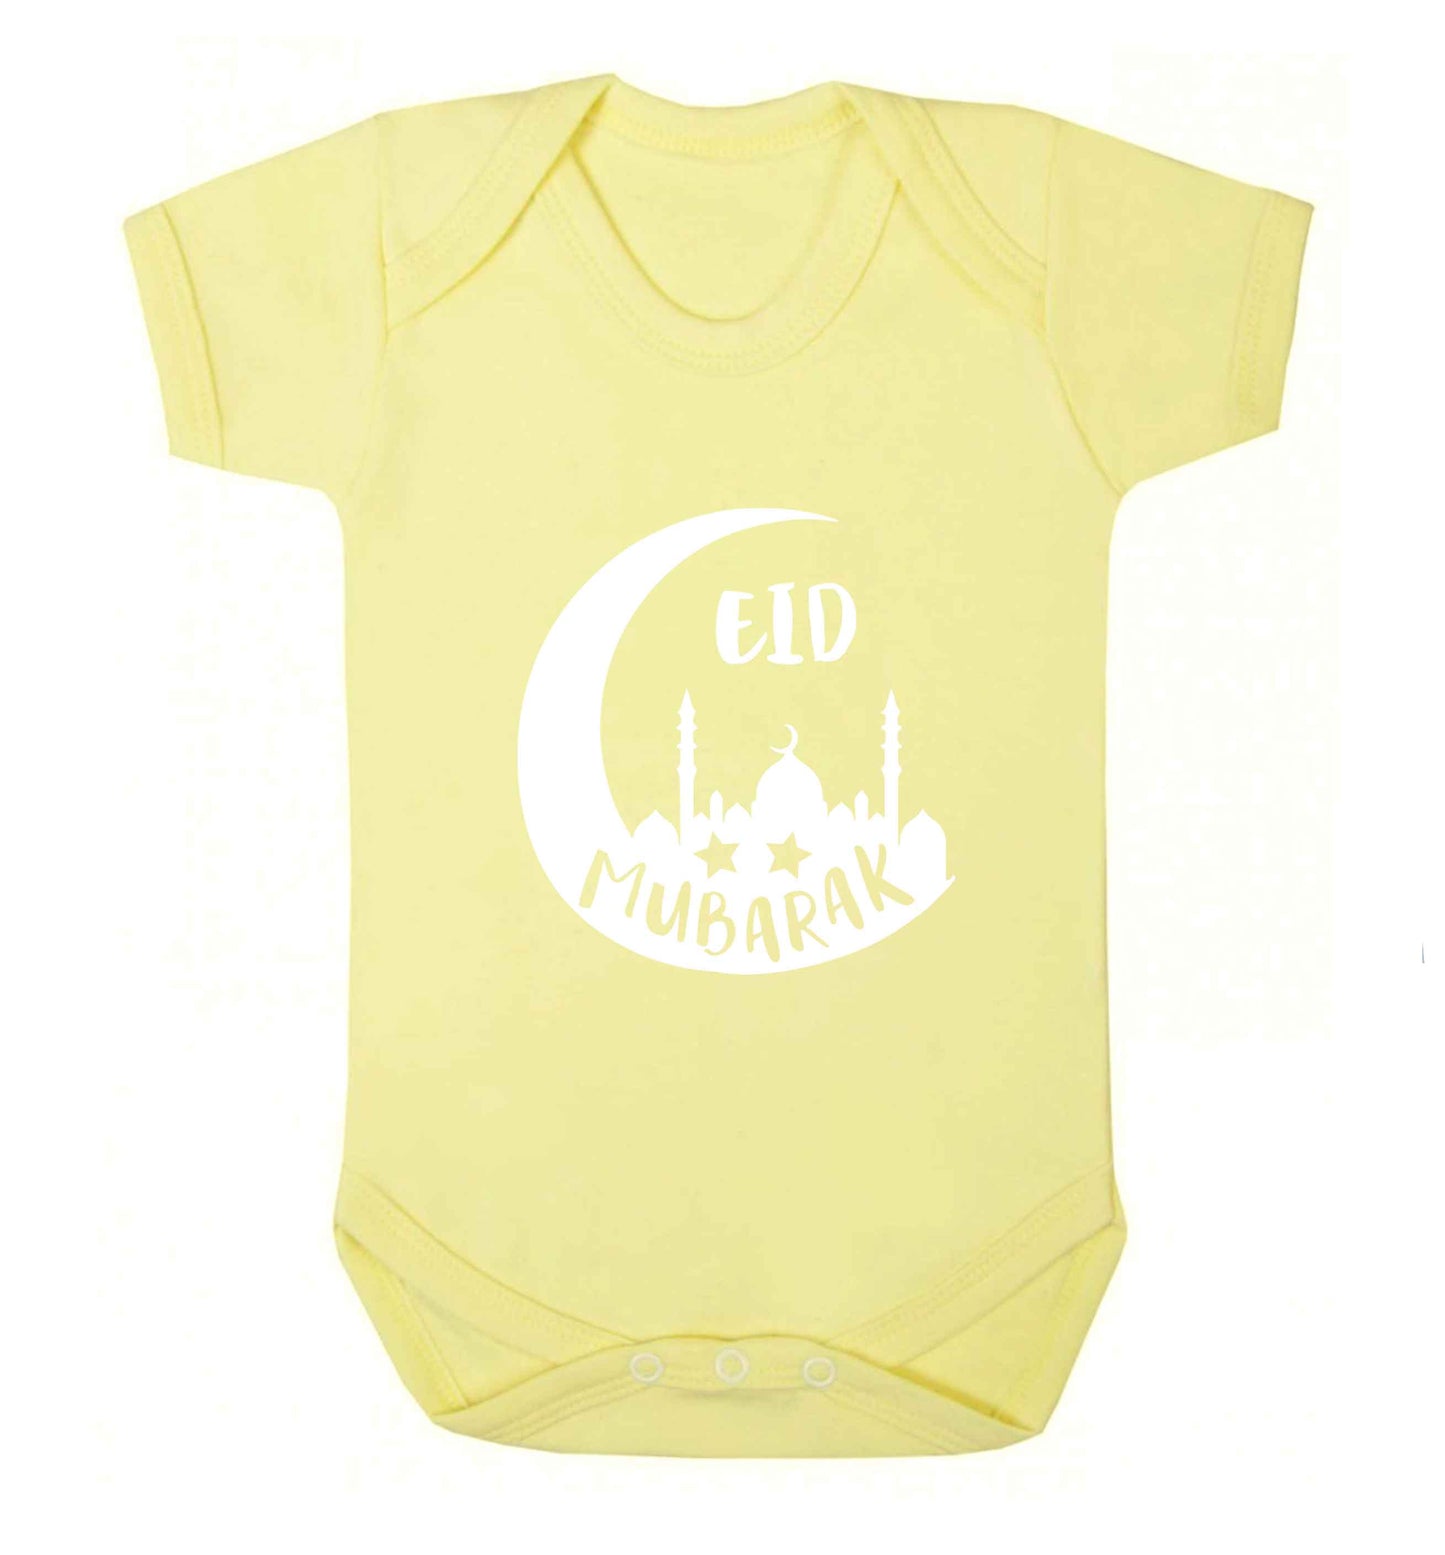 Eid mubarak baby vest pale yellow 18-24 months